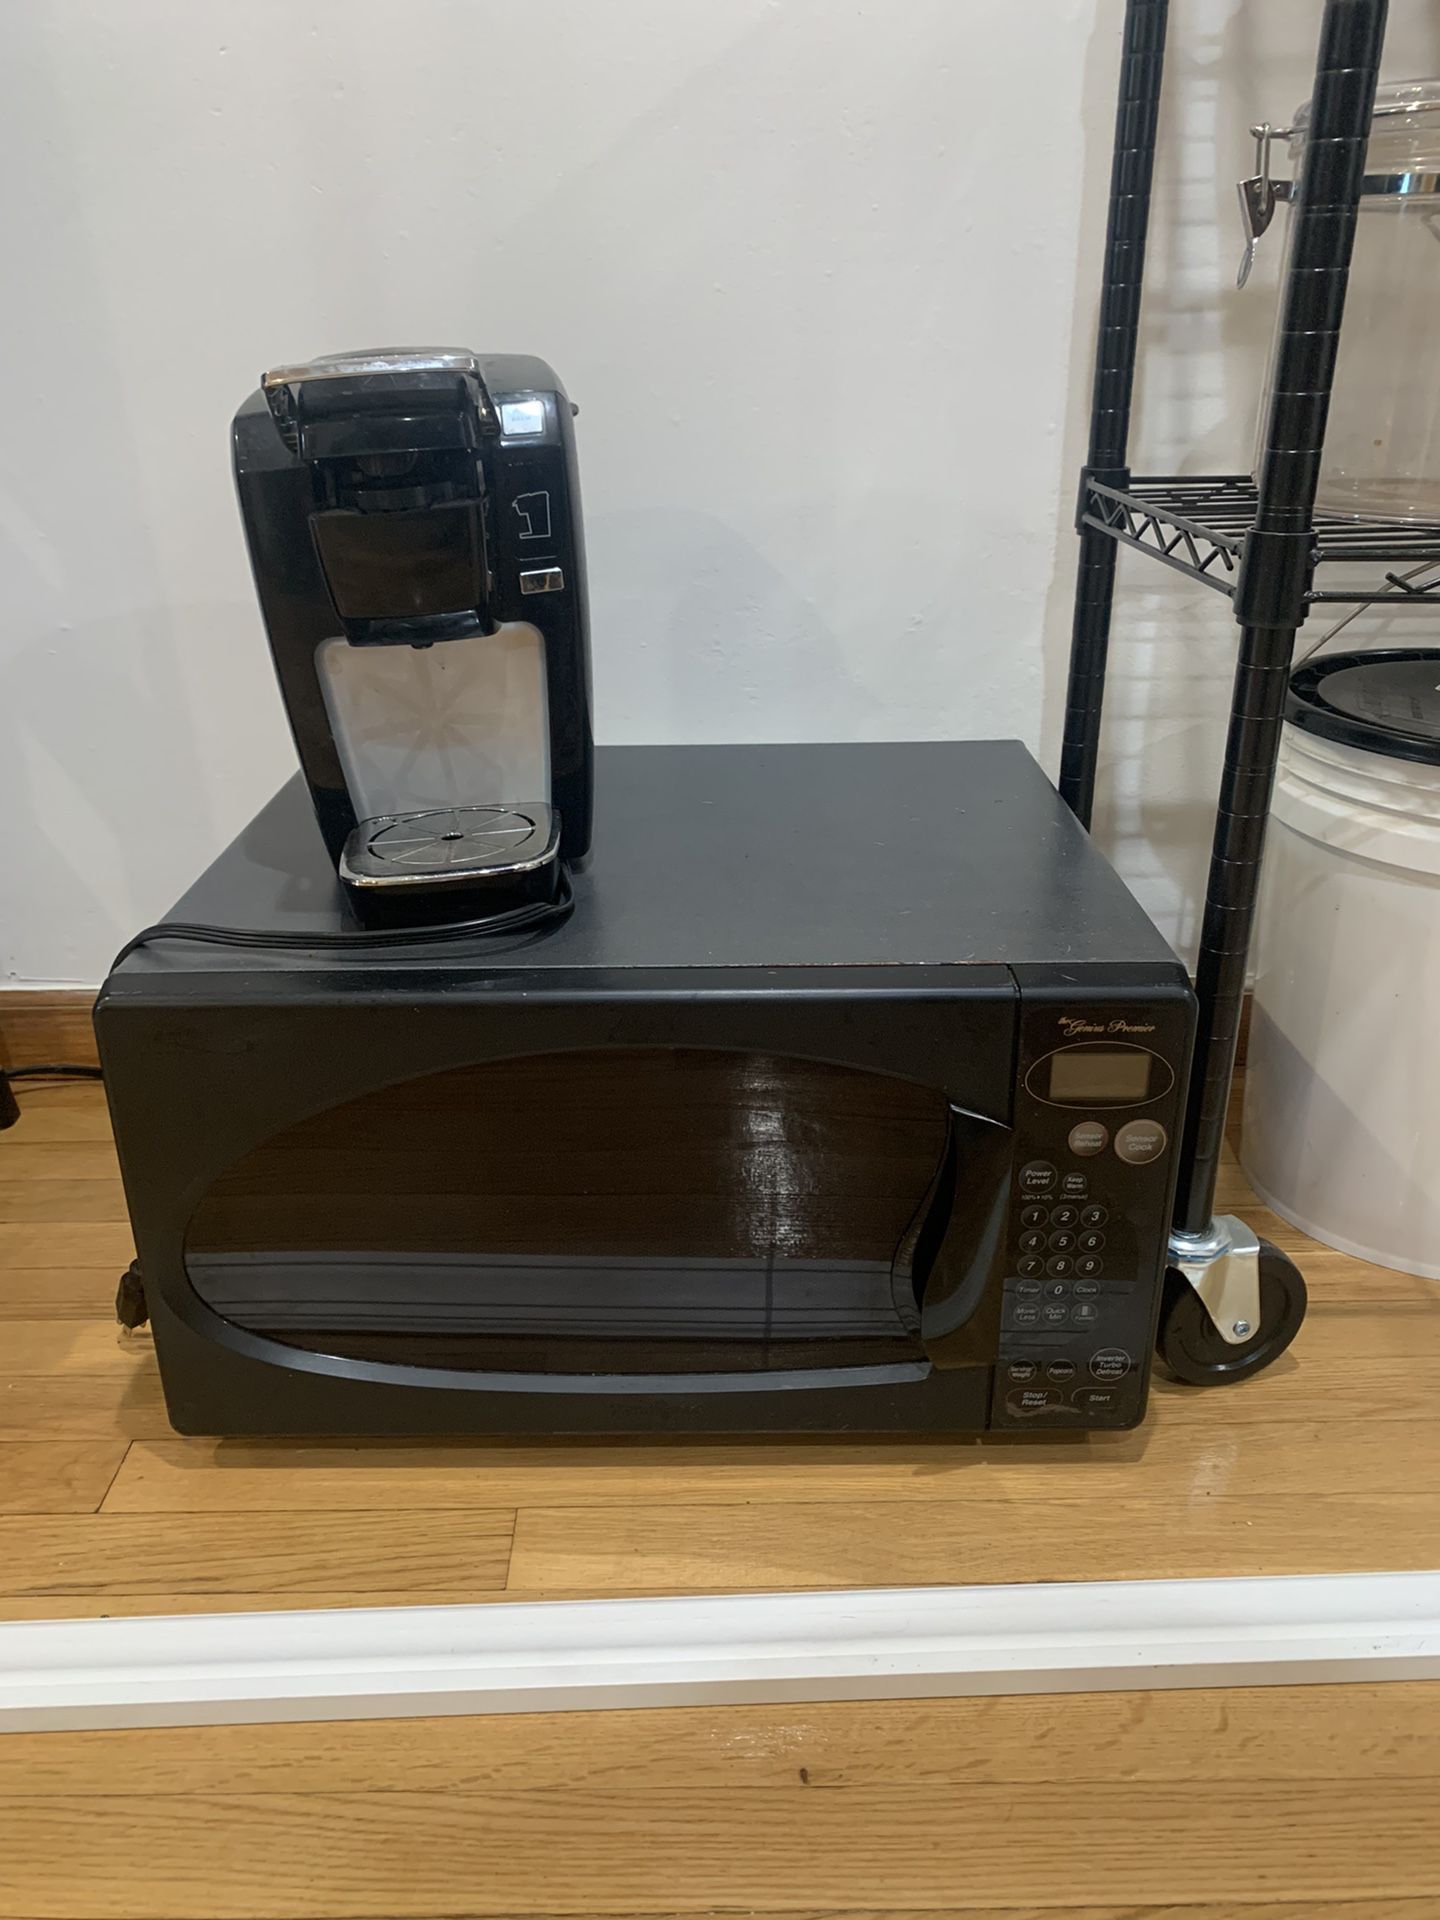 Microwave & Keureg Coffee Maker